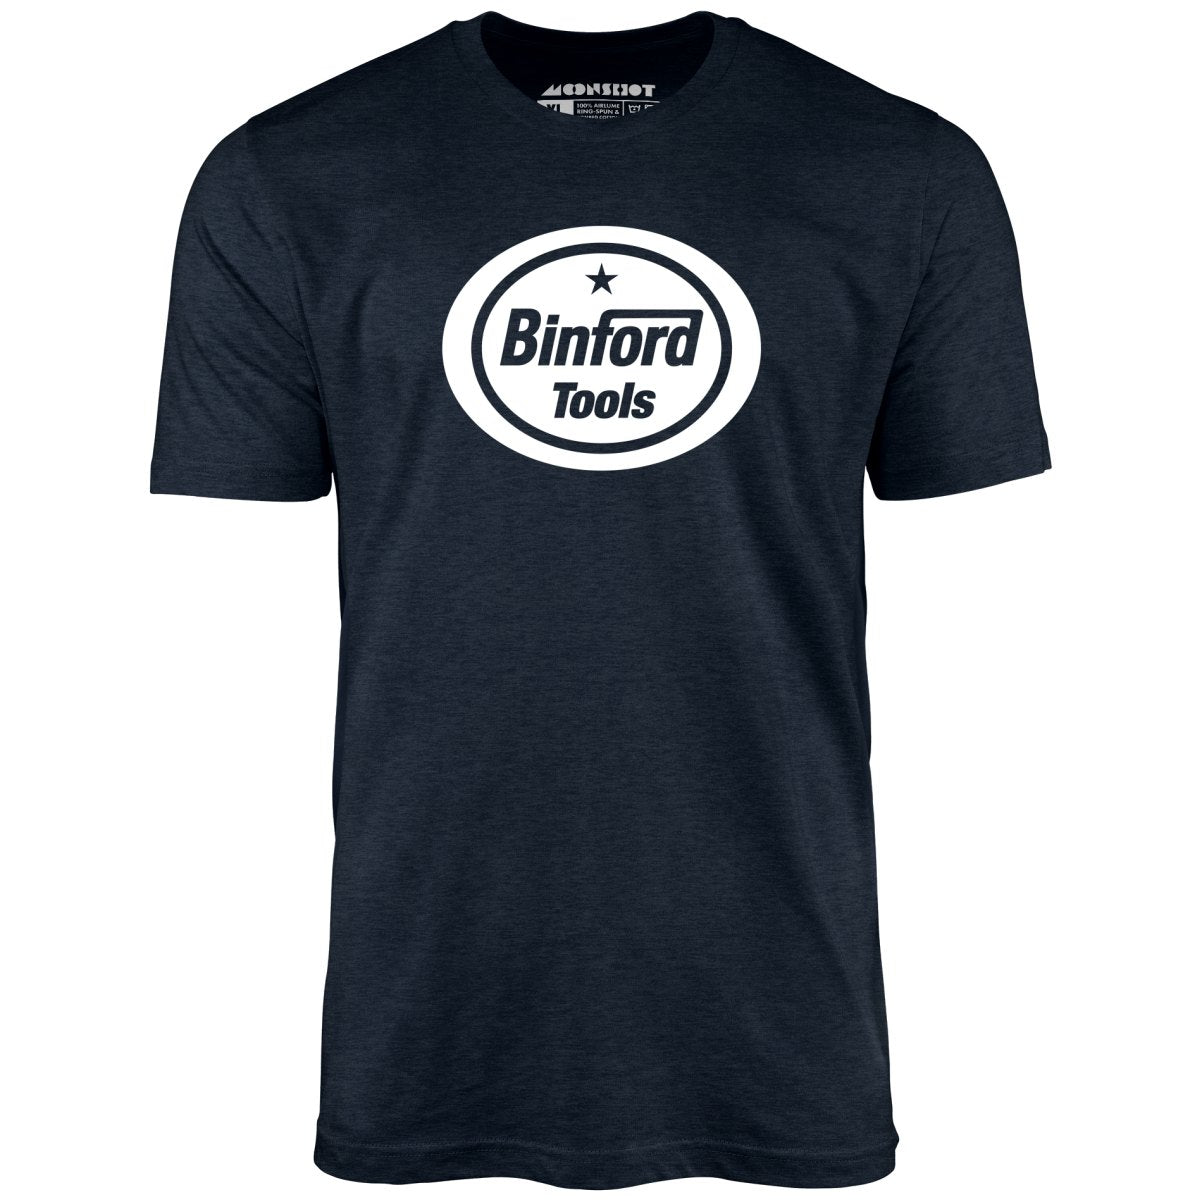 Binford Tools - Unisex T-Shirt